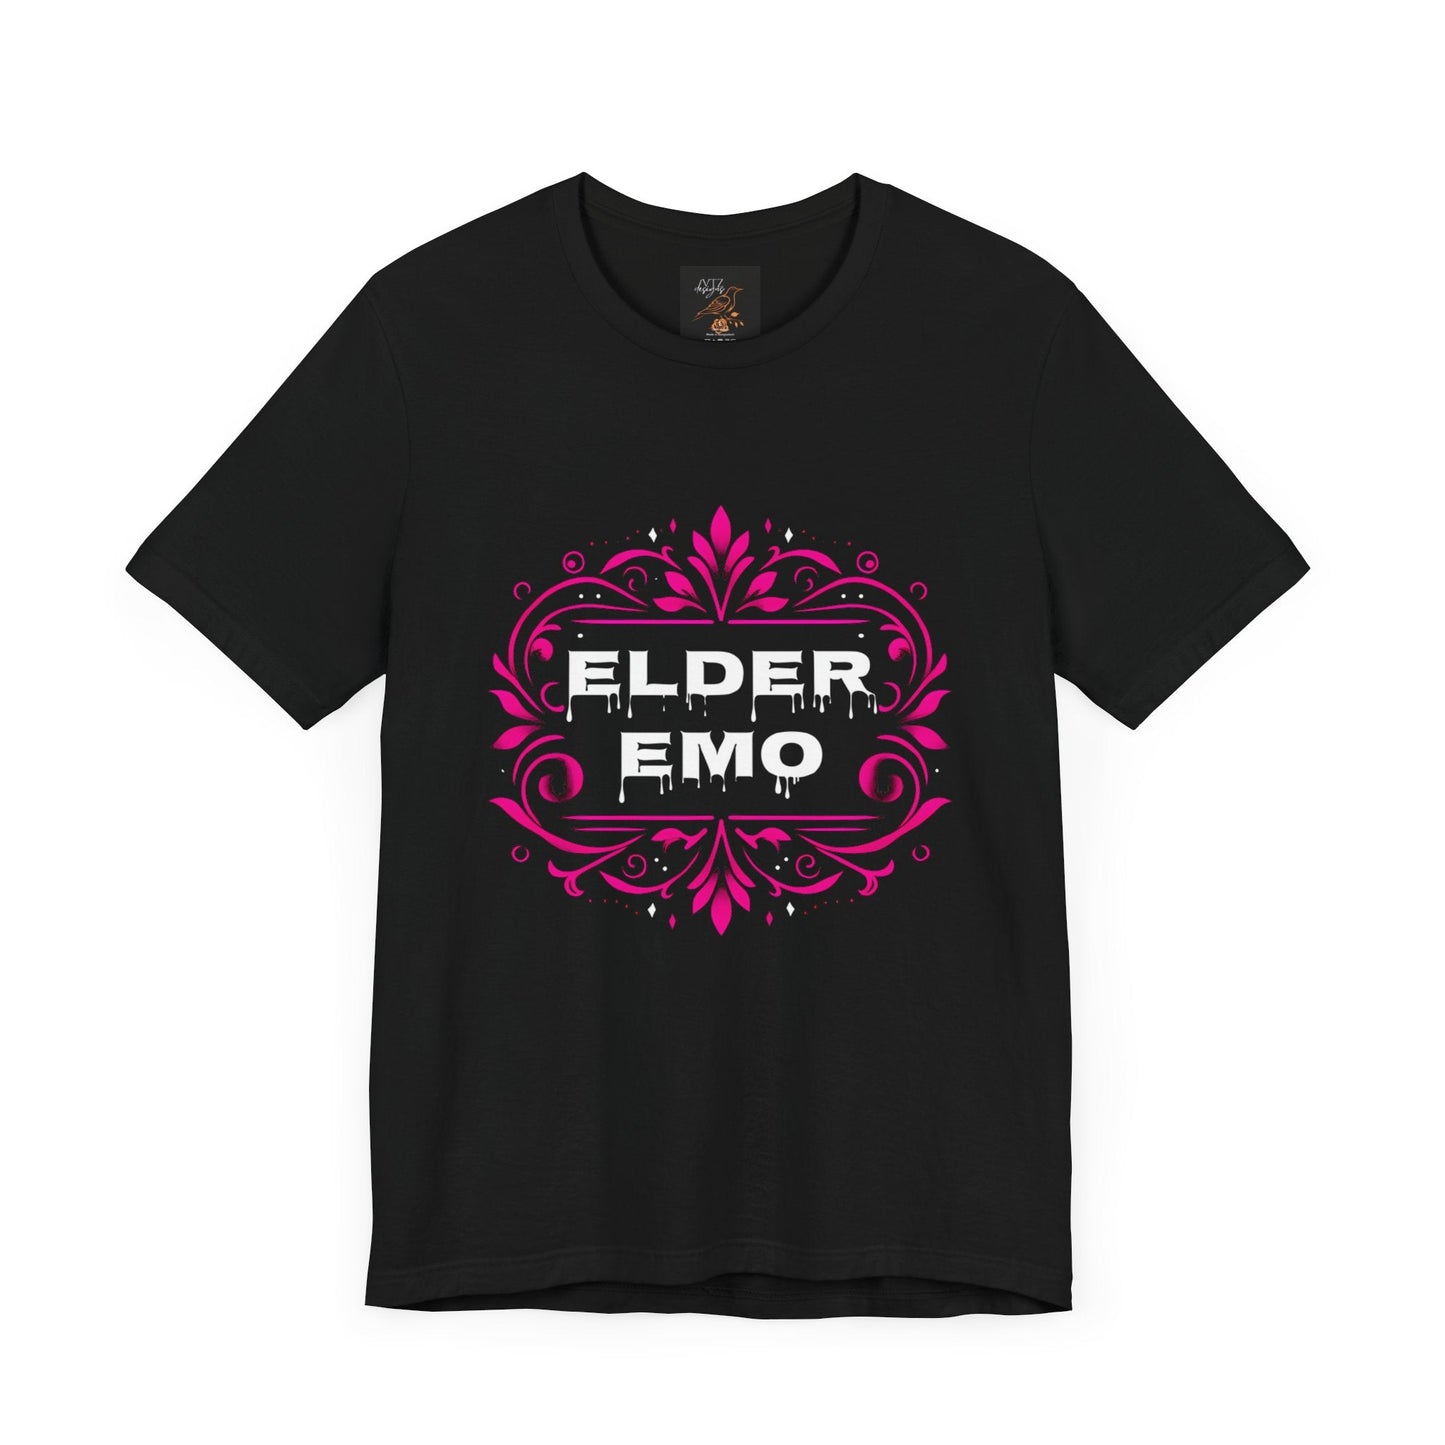 Elder Emo Tee ShirtT - ShirtVTZdesignsBlackXSclothesclothingCotton